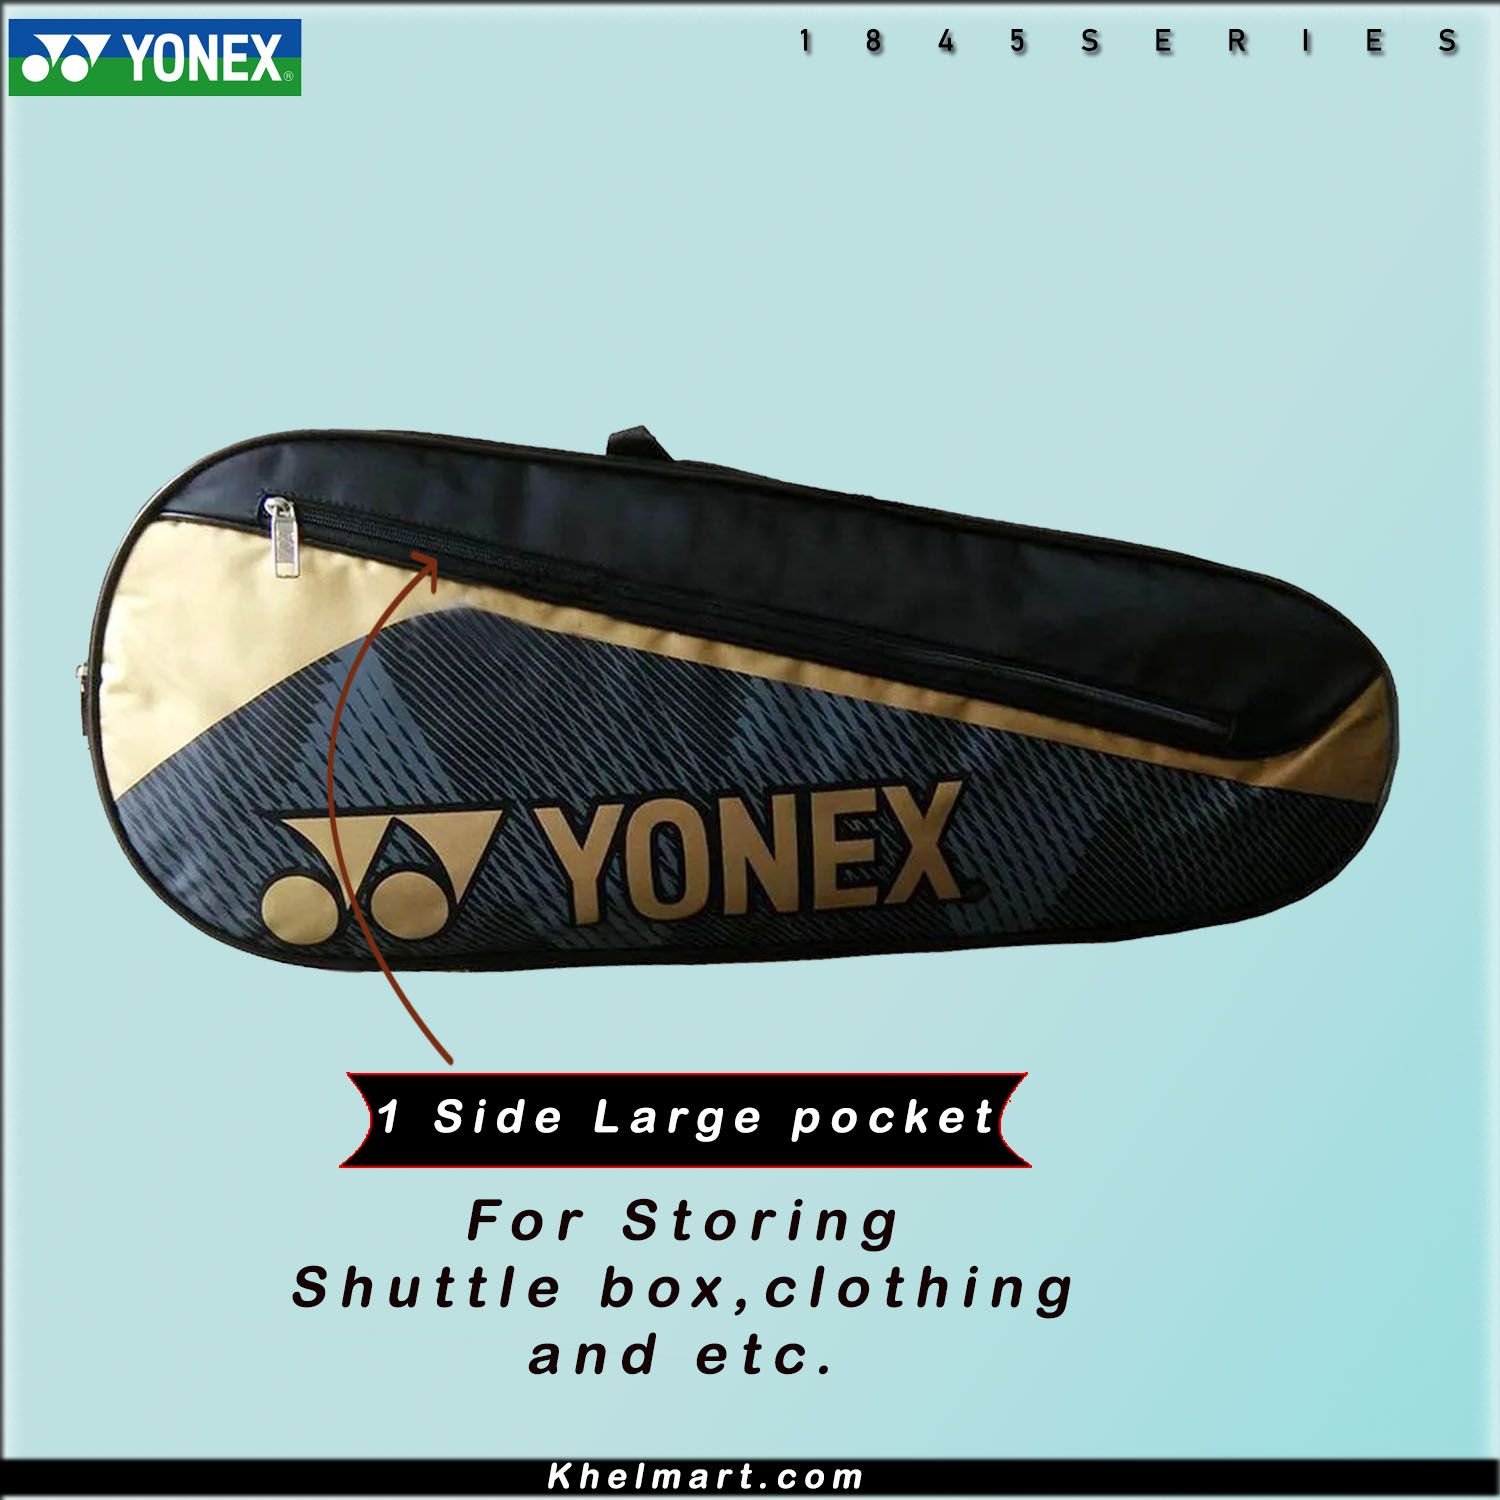 YONEX SUNR 1845 Thermal Badminton Kit Bag Black And Gold